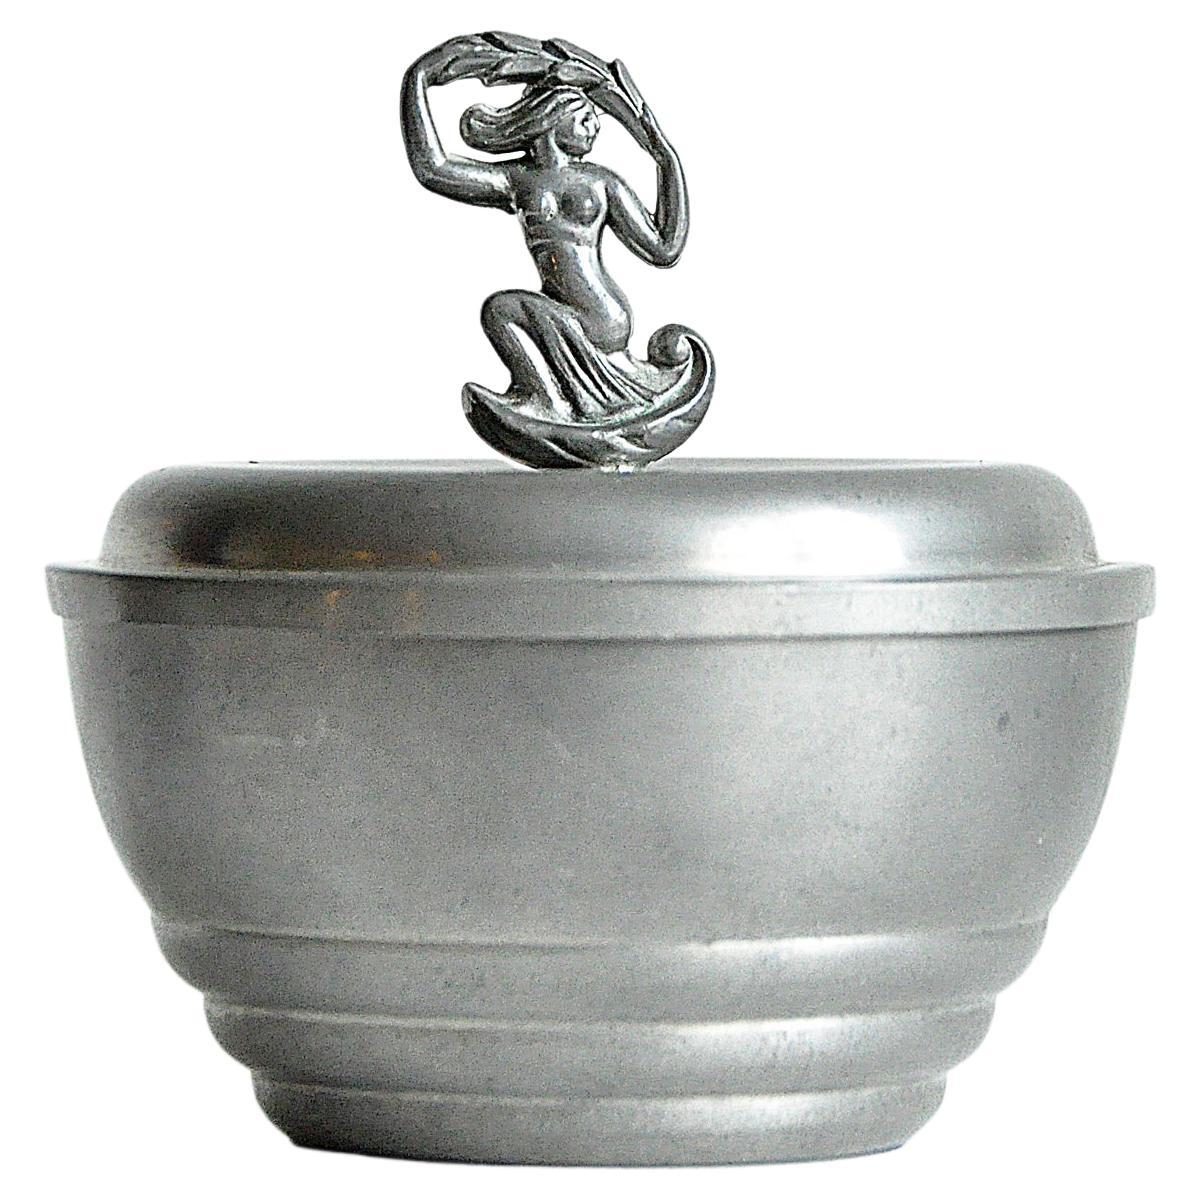 Pewter Jar from C. G. Hallberg 1932